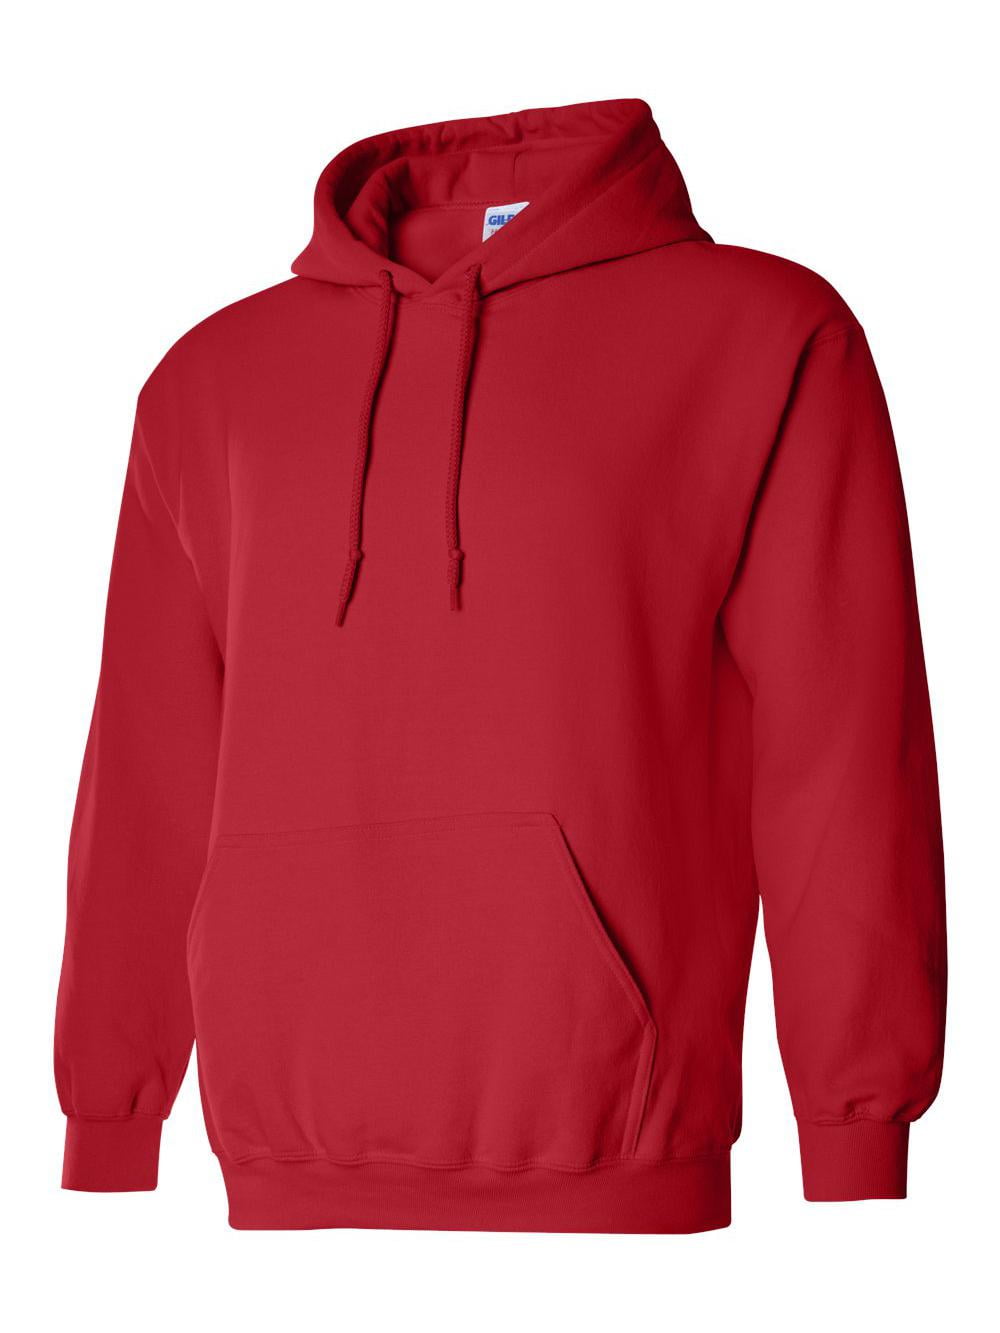 Gildan - Gildan Mens Heavy Blend Hooded Sweatshirt - Walmart.com ...